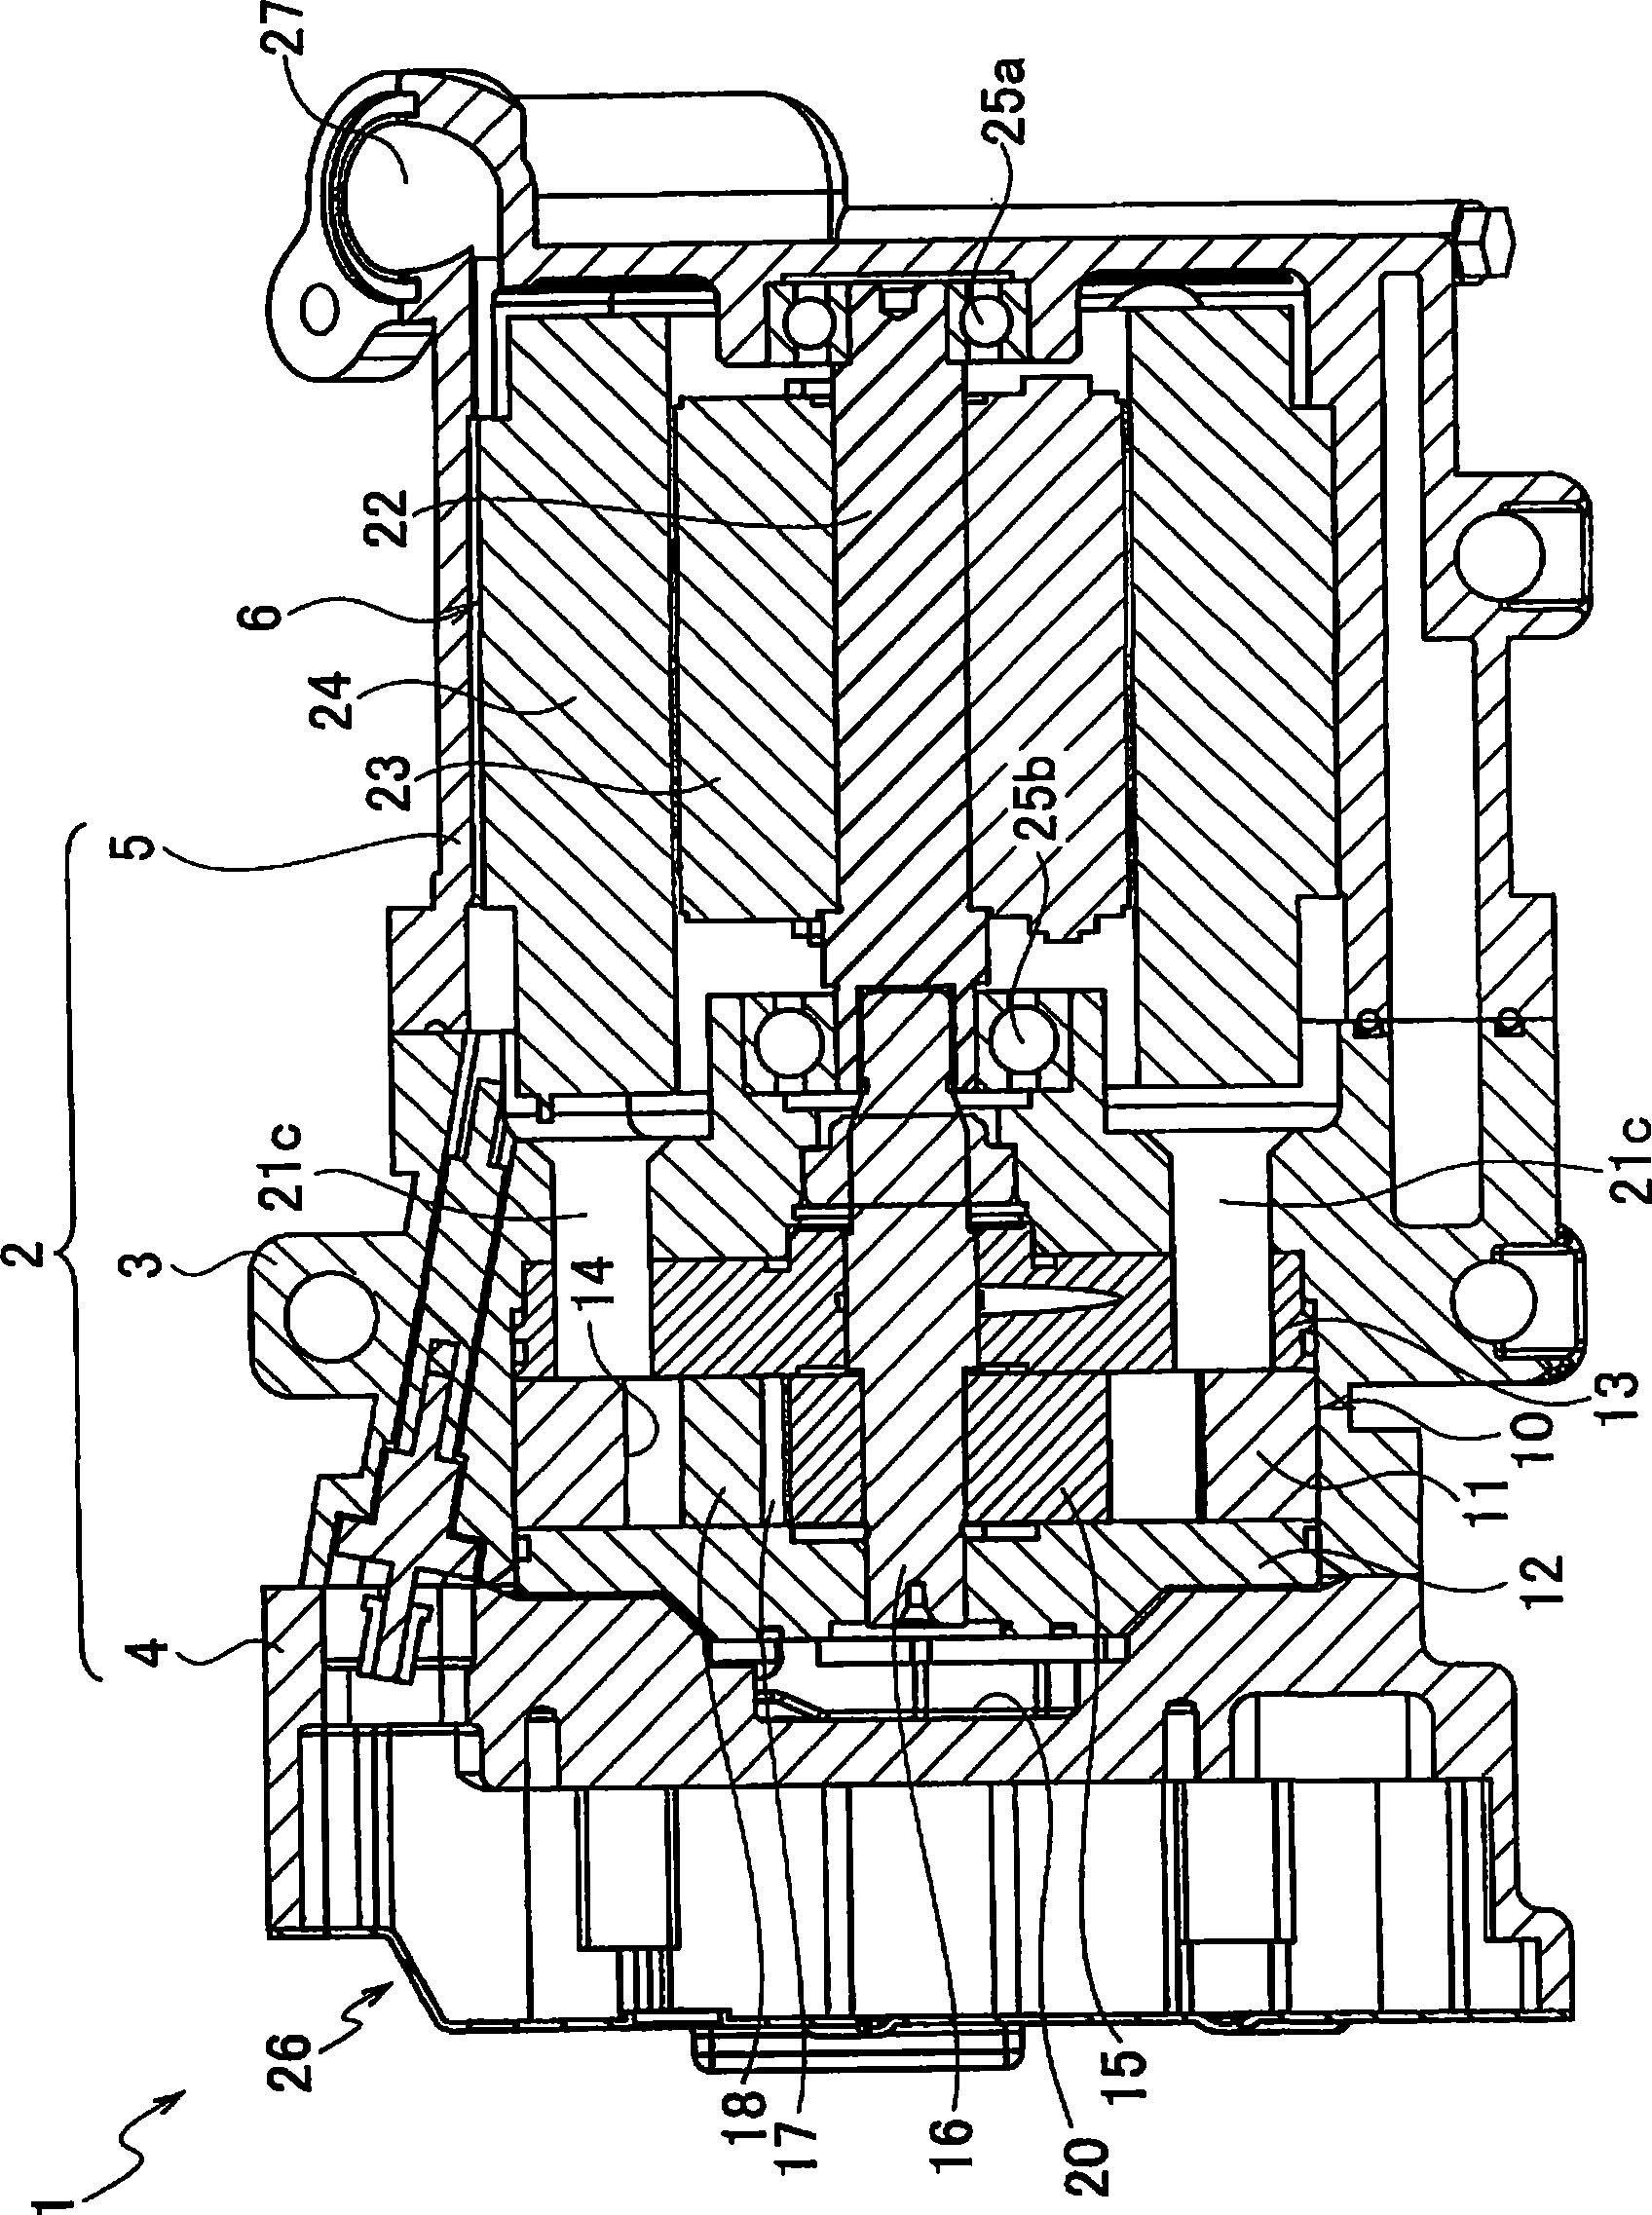 Vane-type compressor